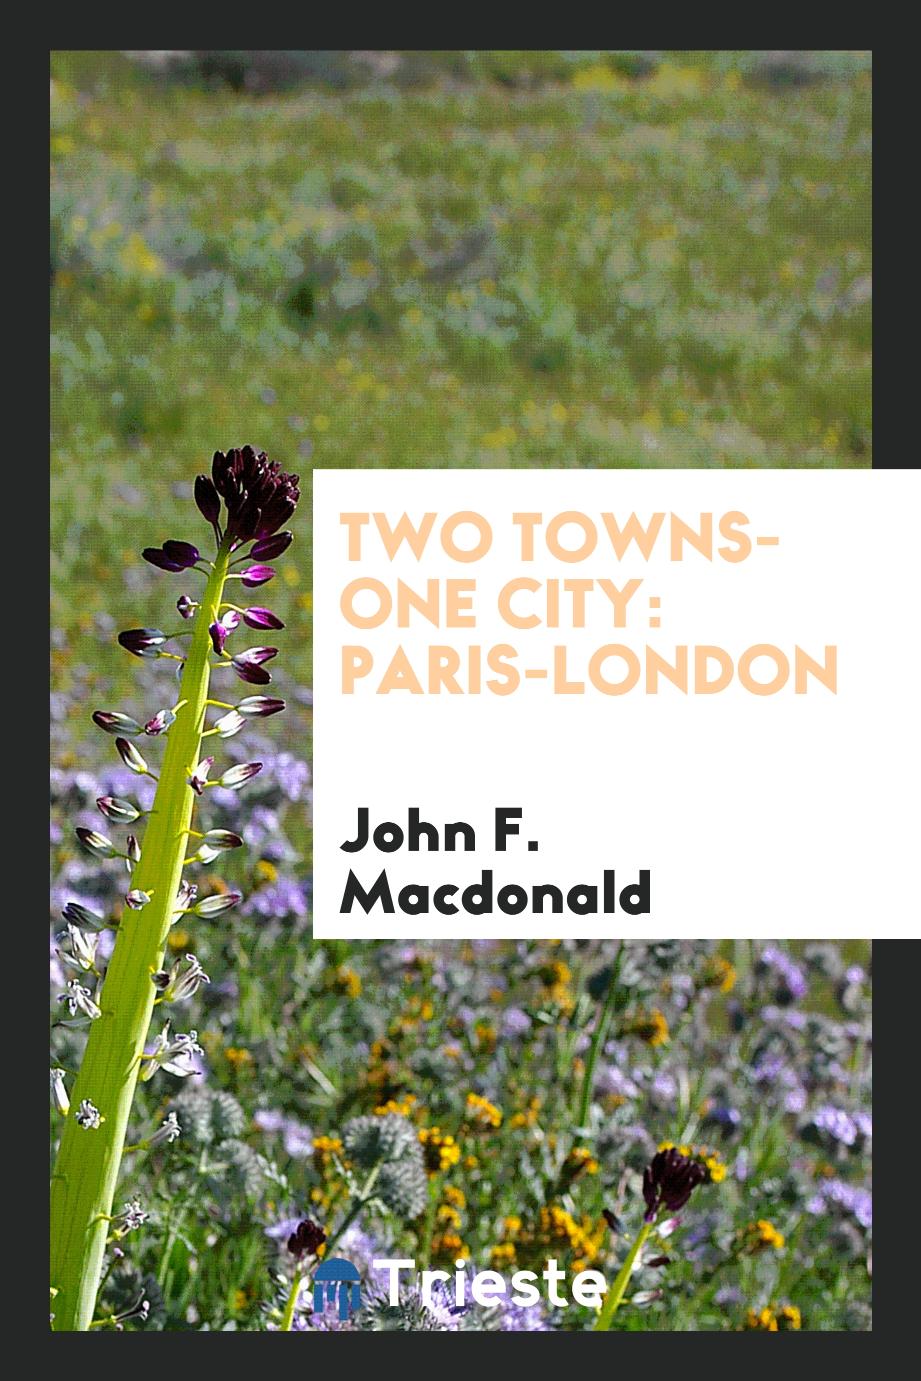 Two towns-one city: Paris-London